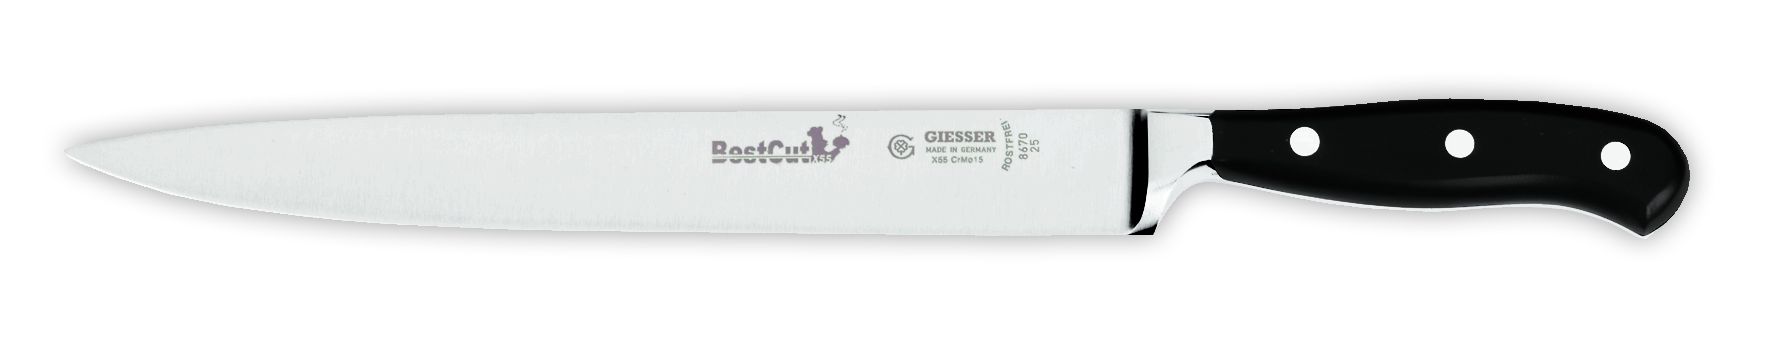 Нож-слайсер BestCut 8670, 25 см,  черная рукоятка